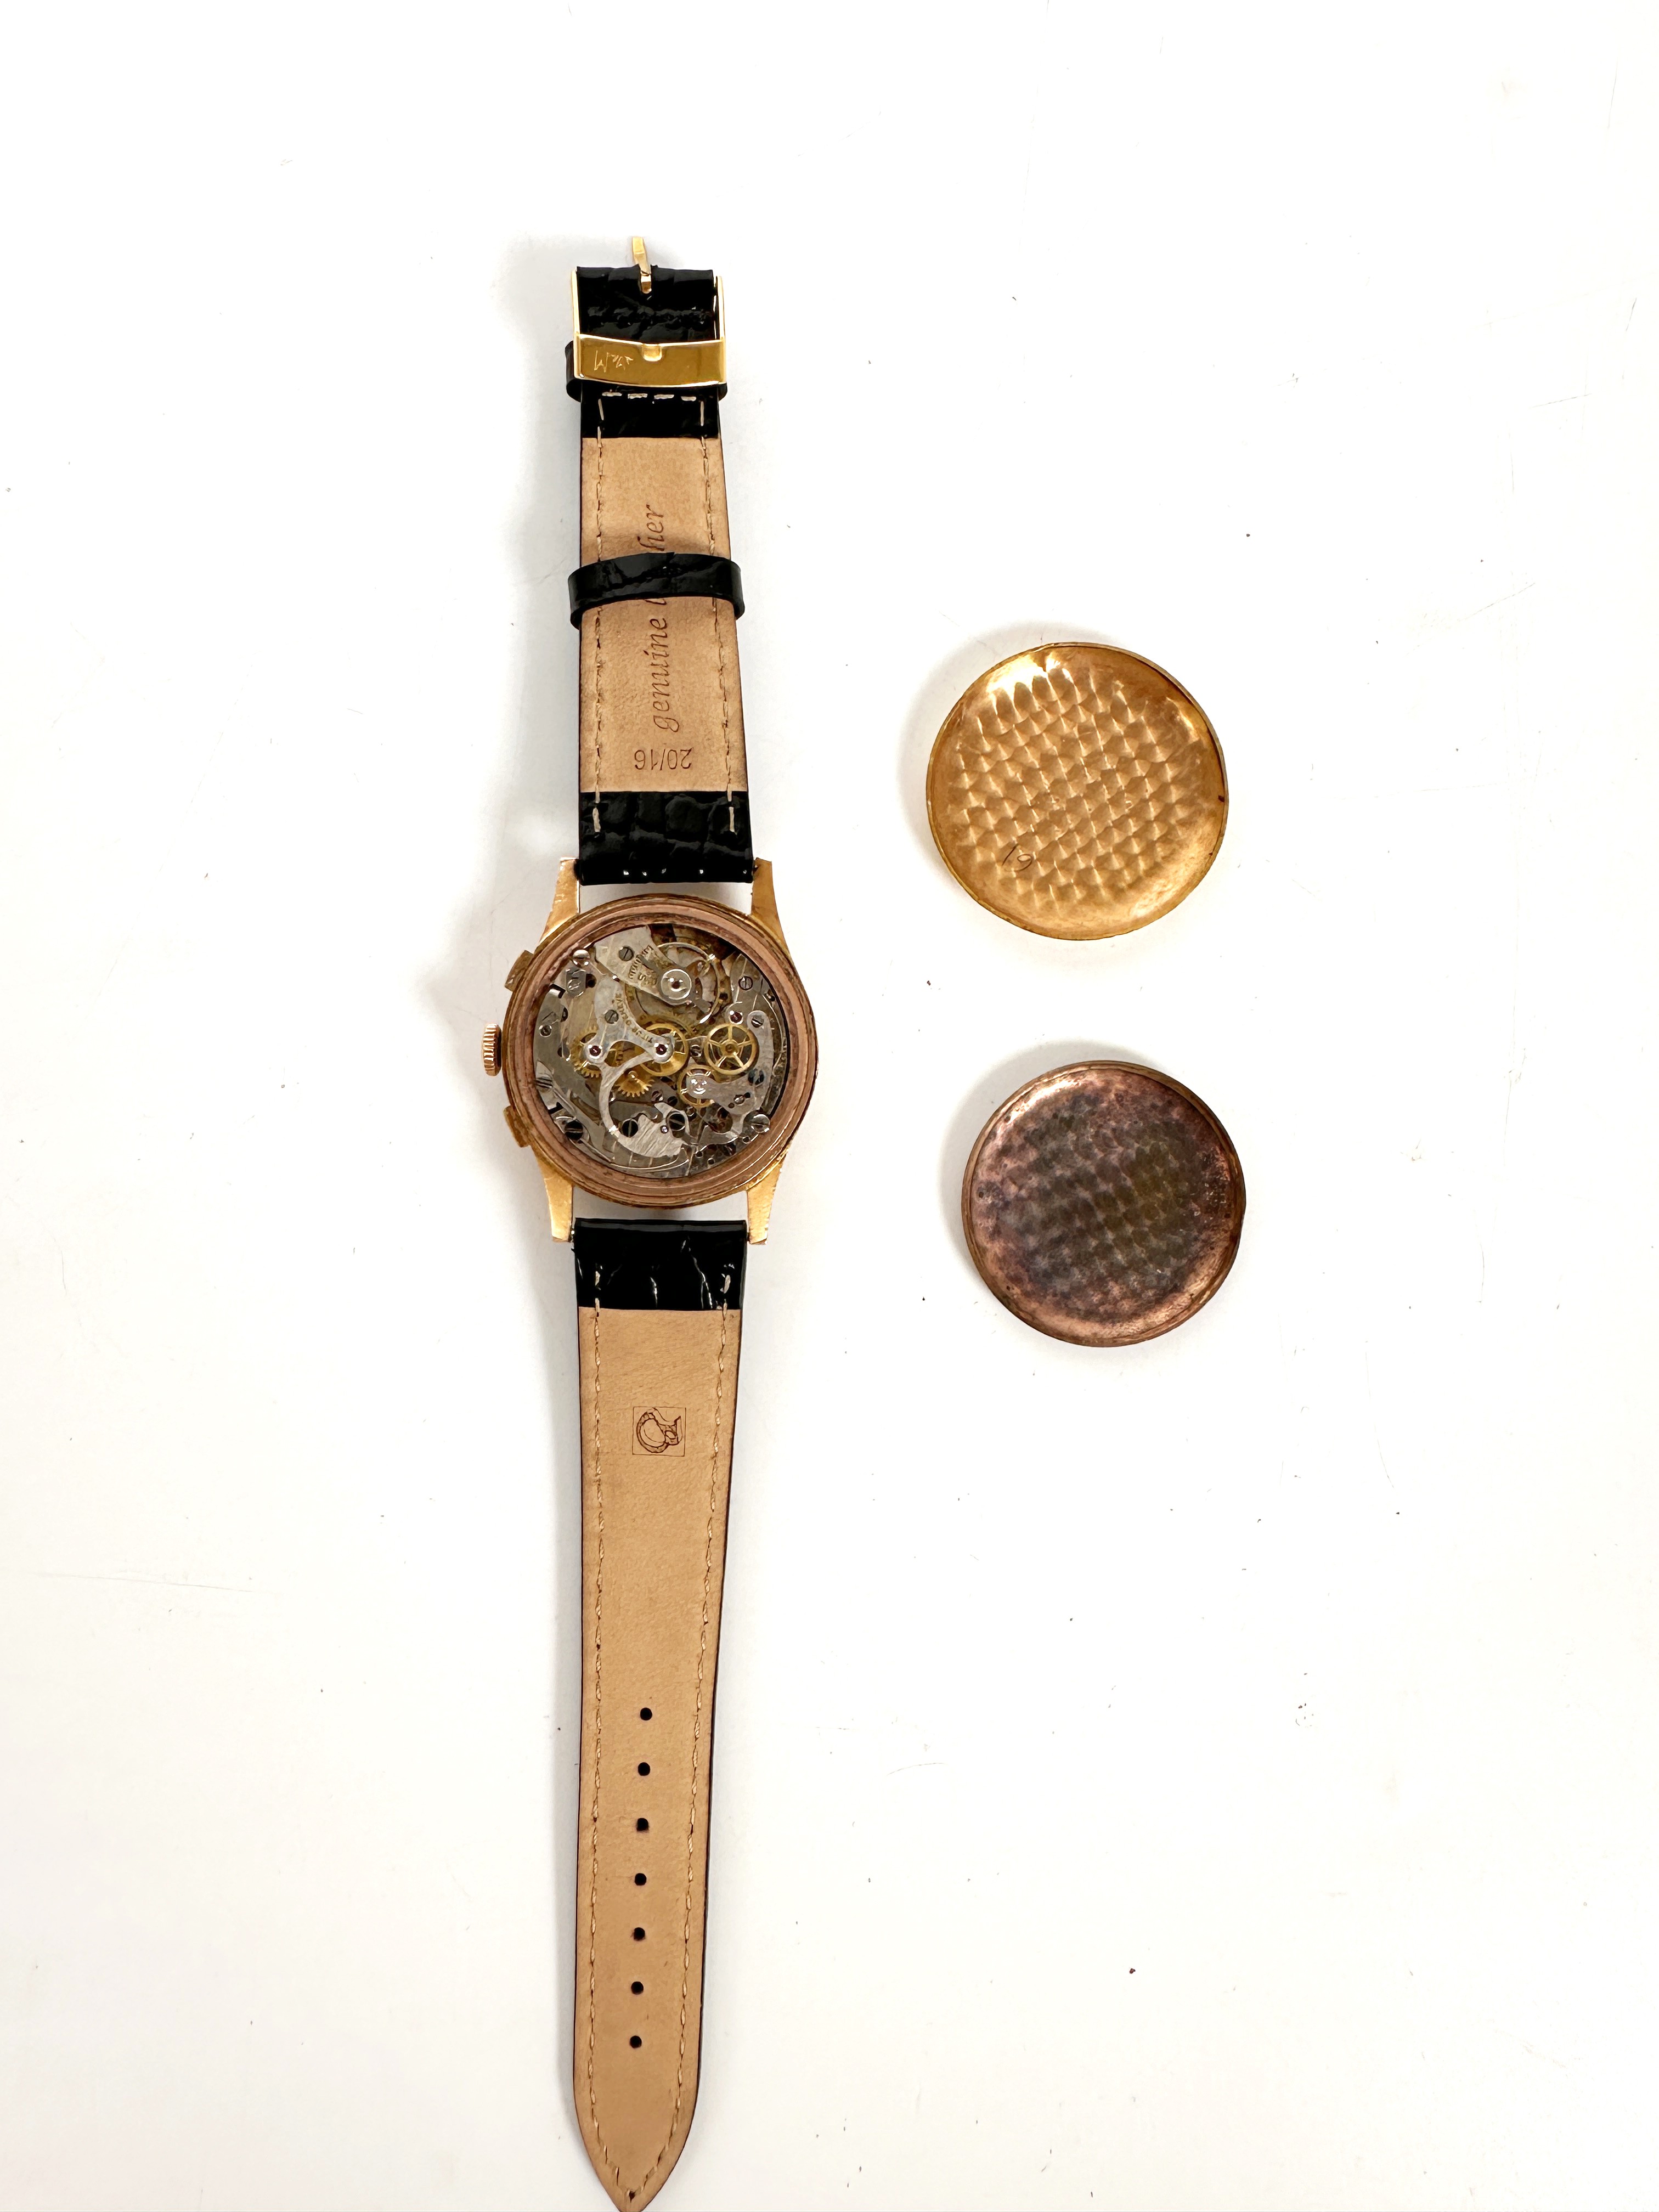 No Reserve - Titus Chronograph Suisse - Men's watch. - Image 6 of 7